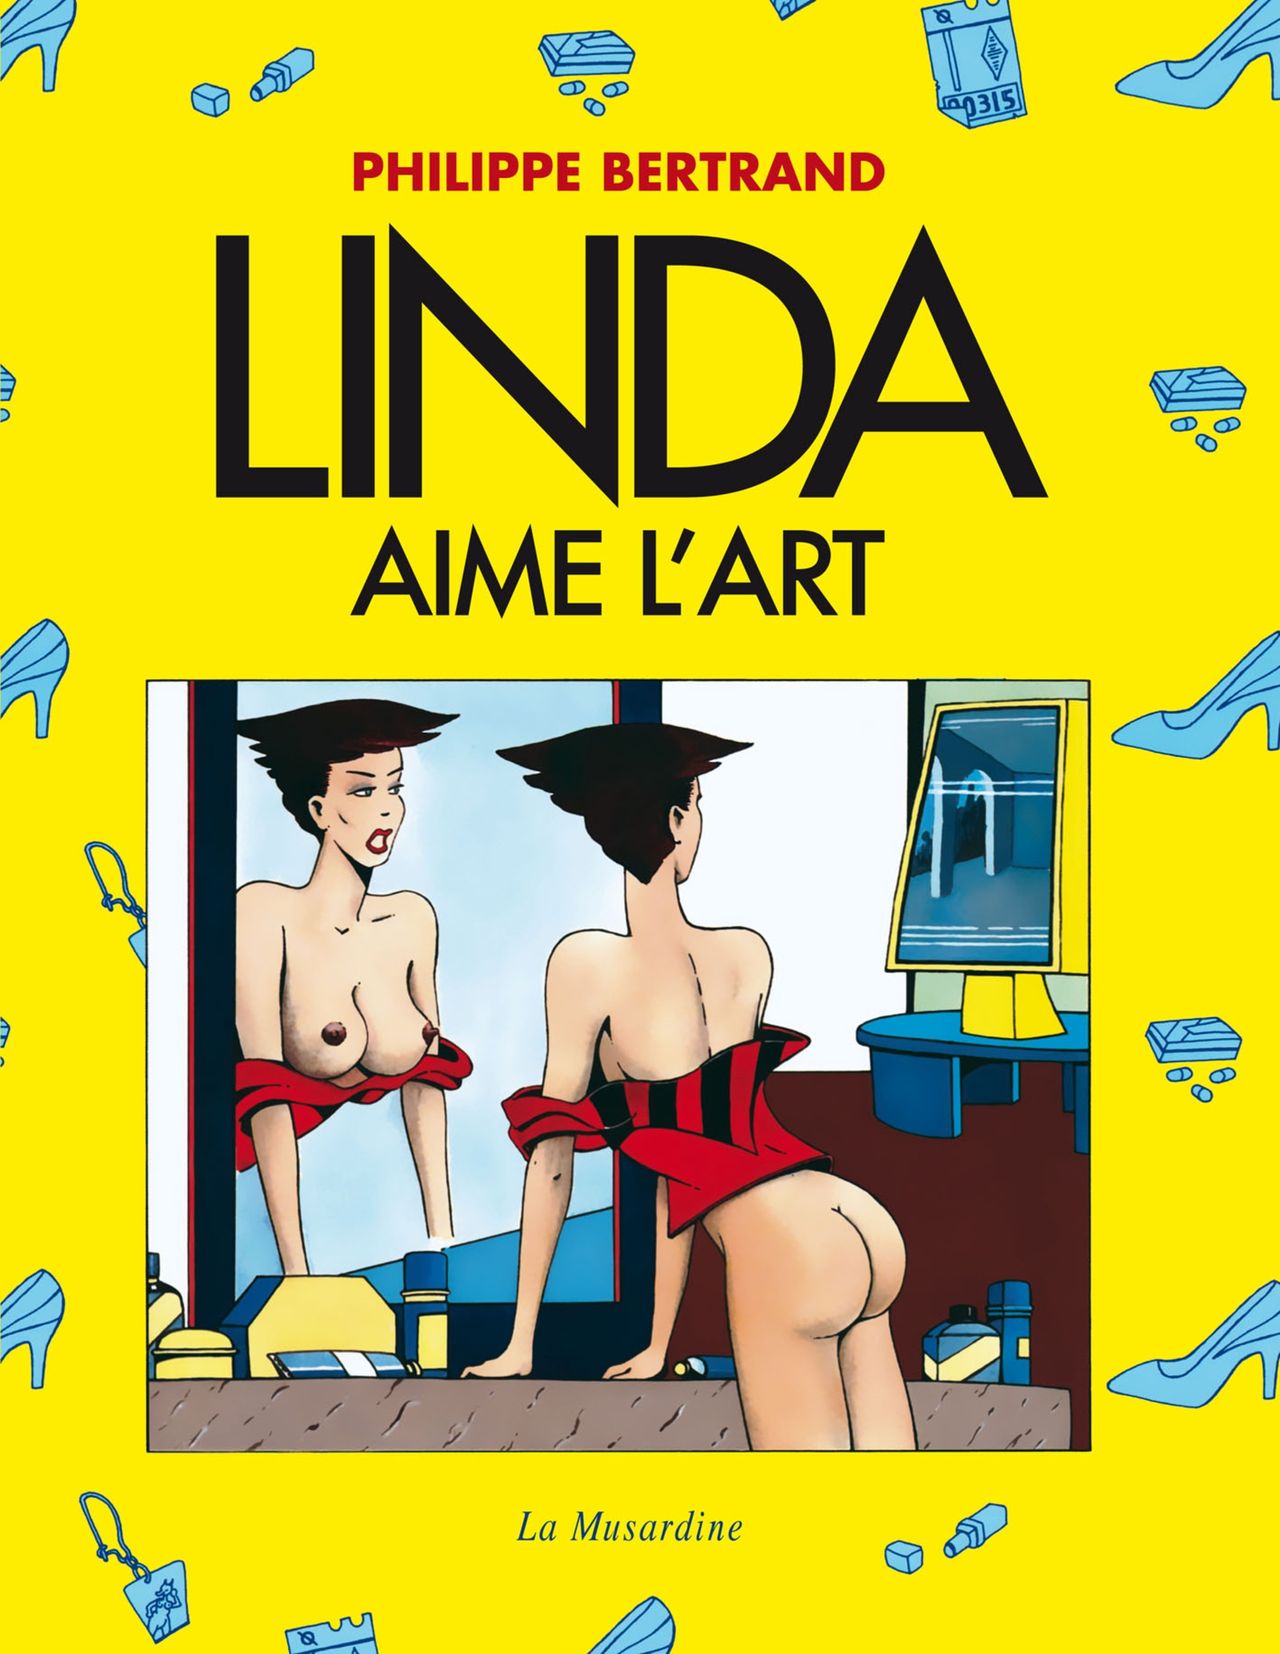 Linda aime l‘art 1